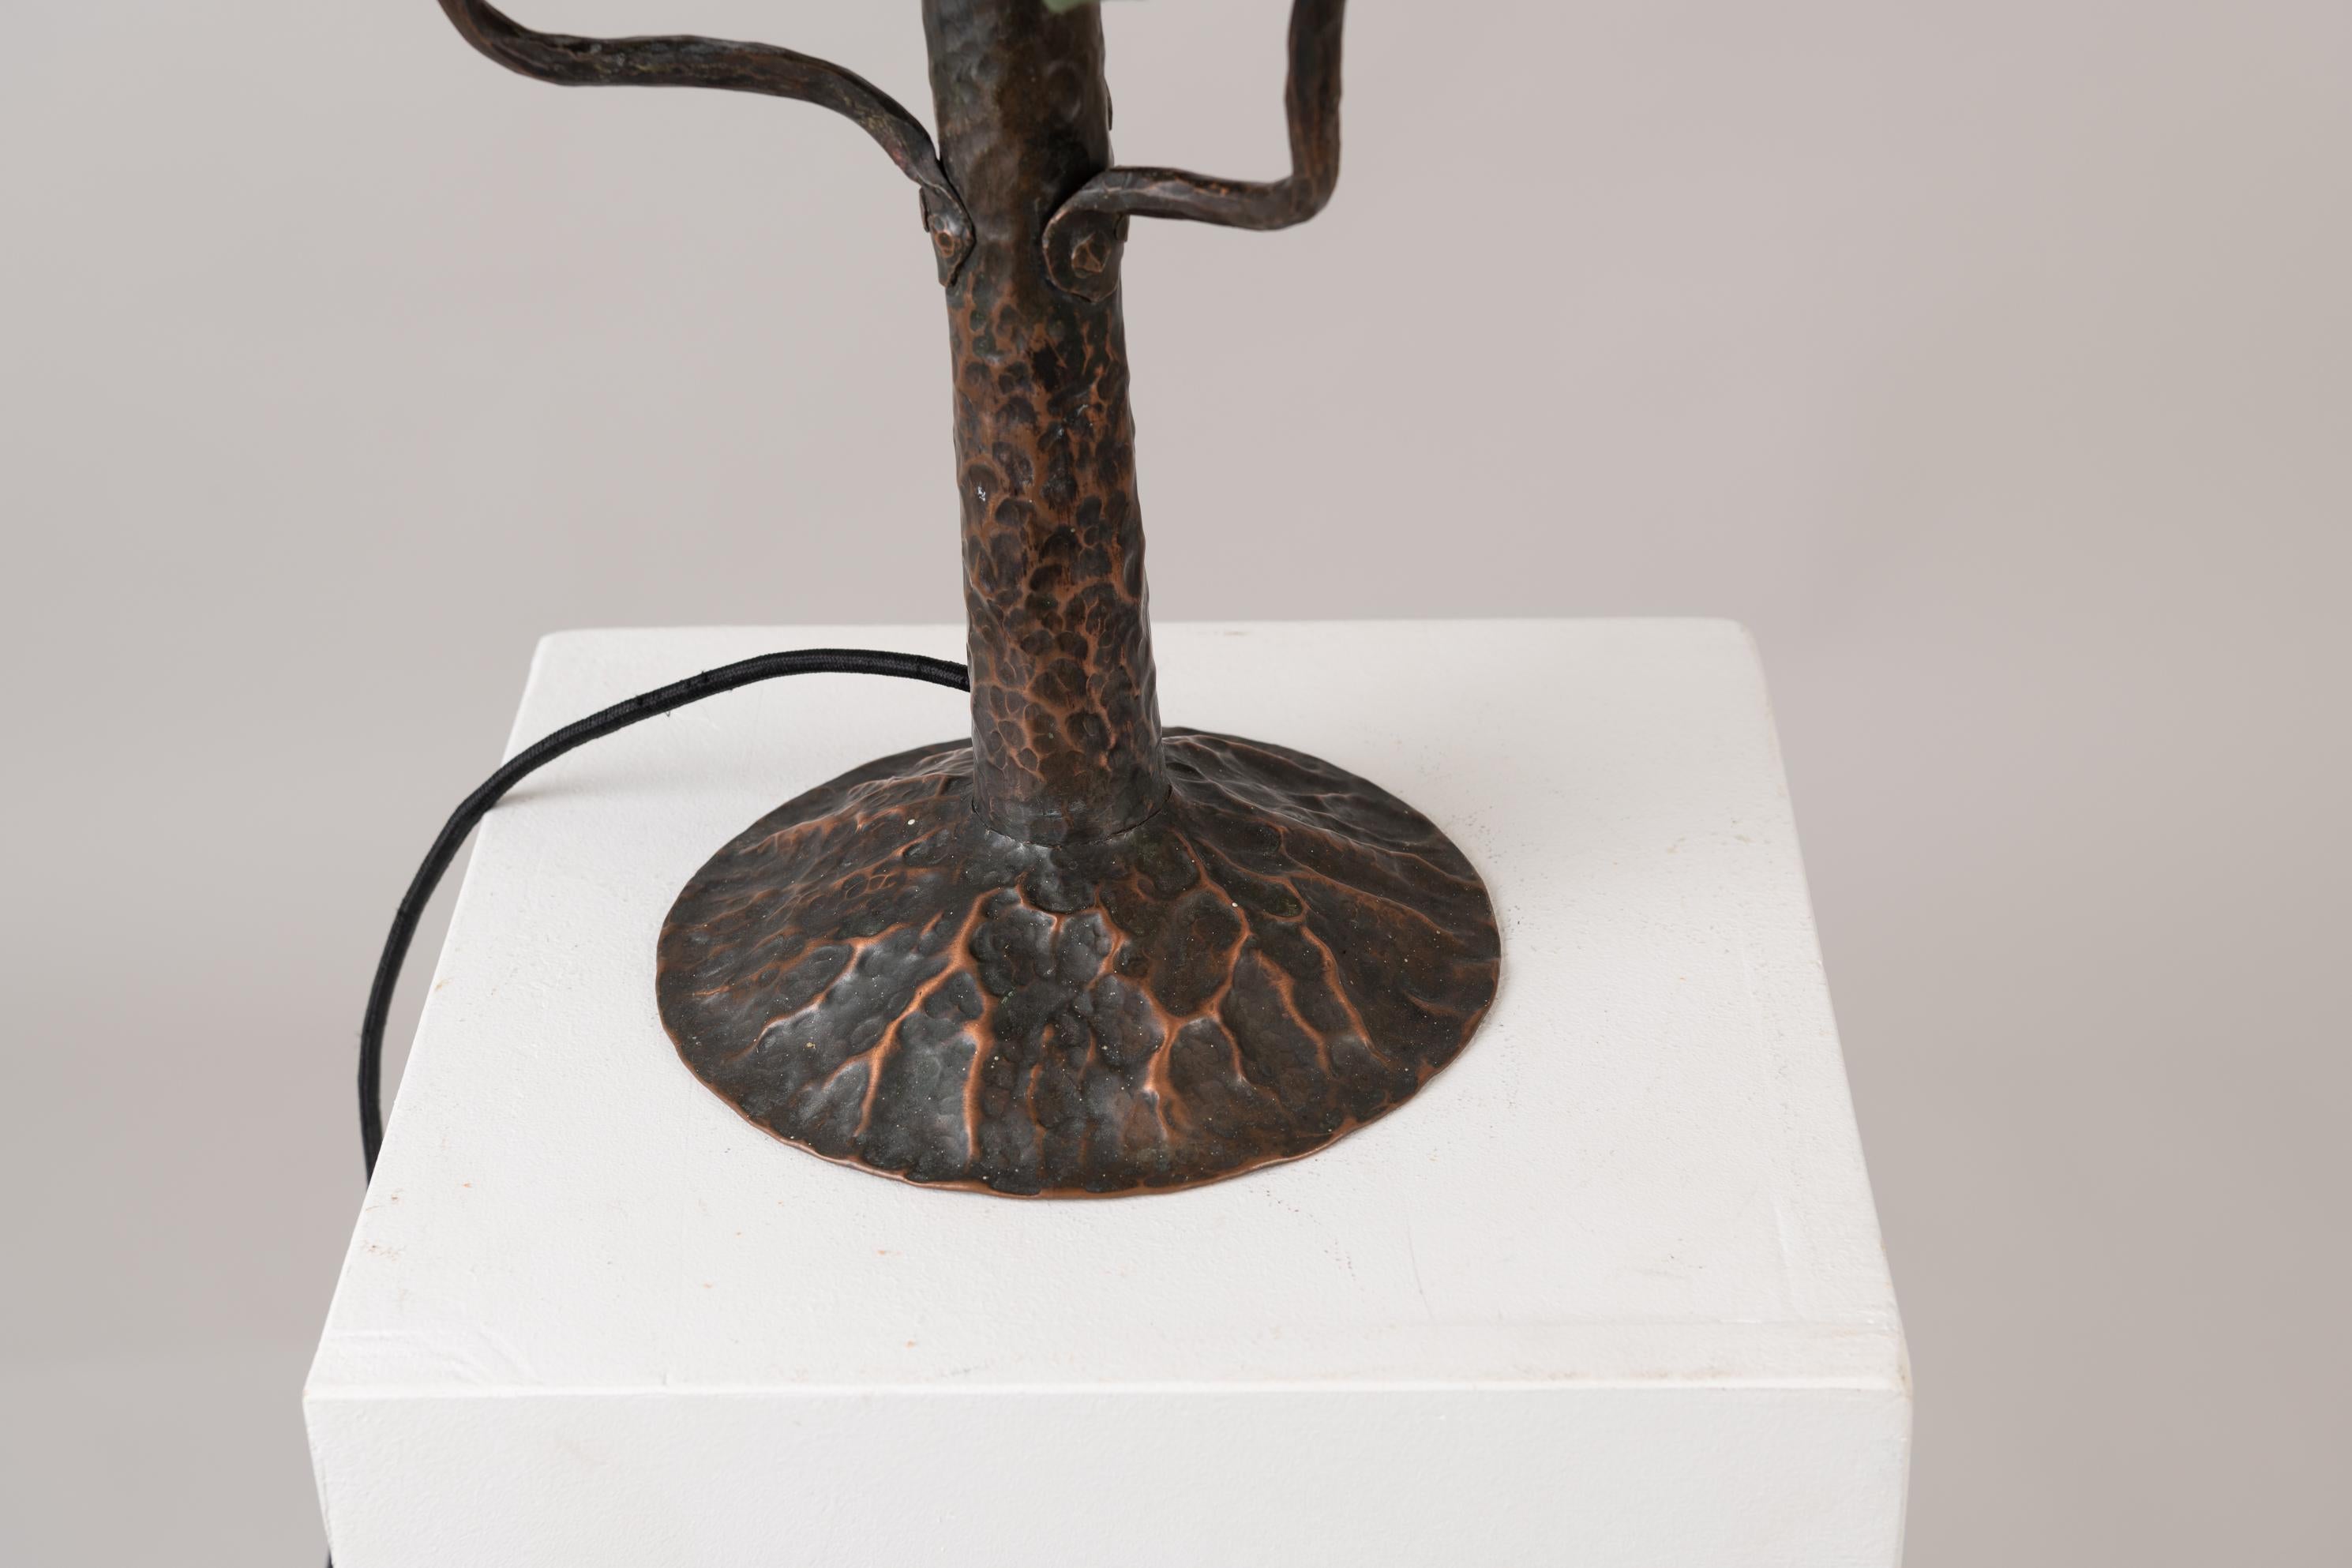 20th Century Swedish Art Nouveau Copper Lamp with Nature Designs